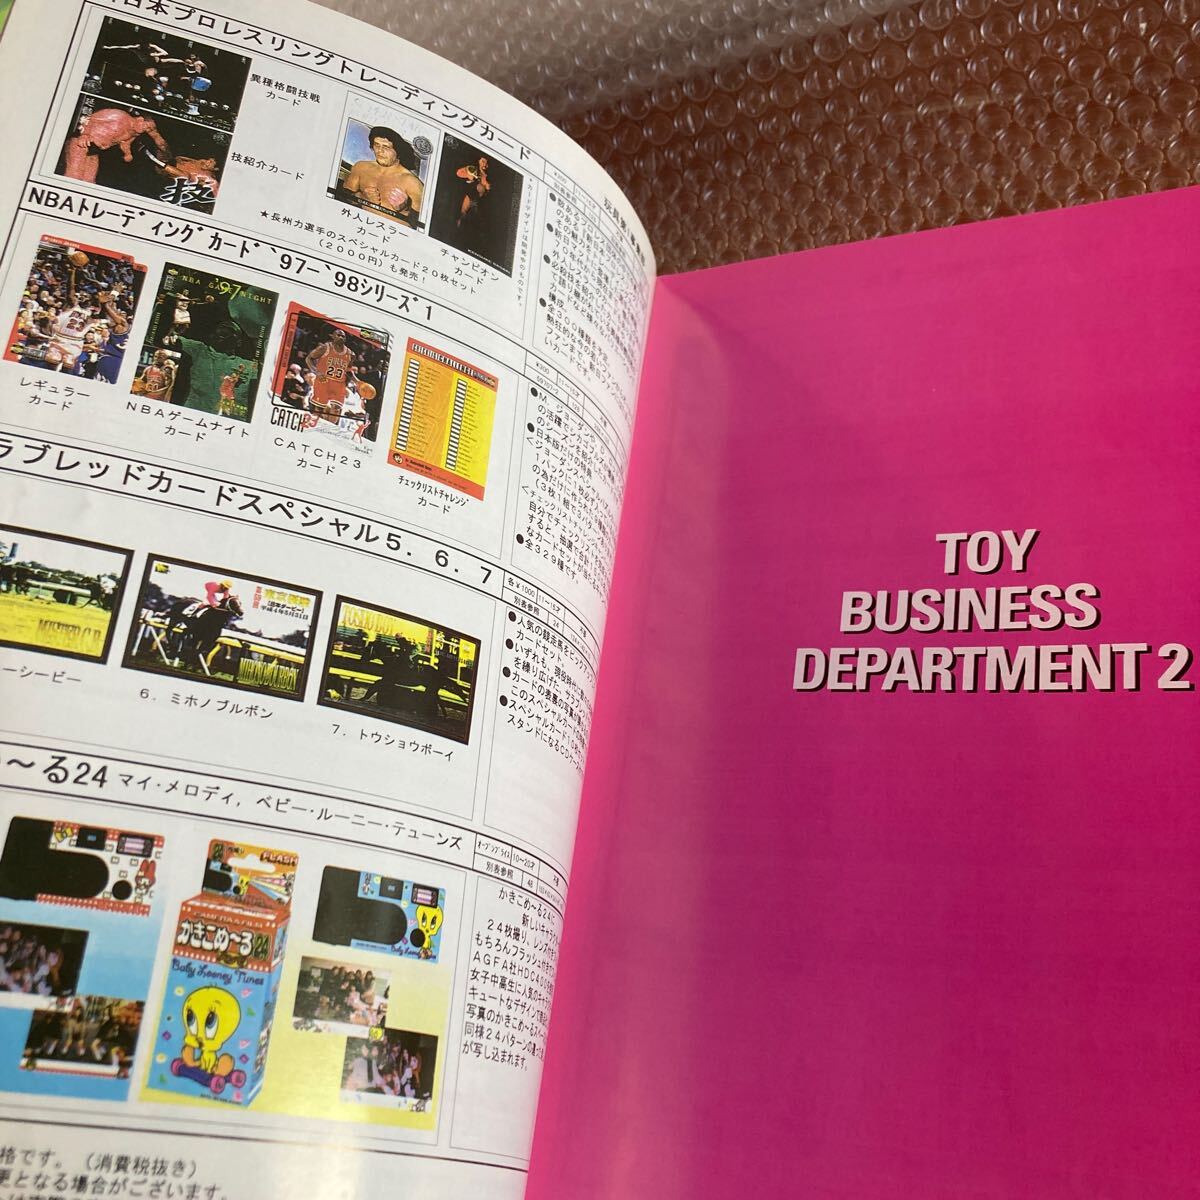  not for sale [ booklet ]1998 Tamagotchi digimon Crayon Shin-chan Ultraman trading card New Japan Professional Wrestling NBA Bandai catalog materials 